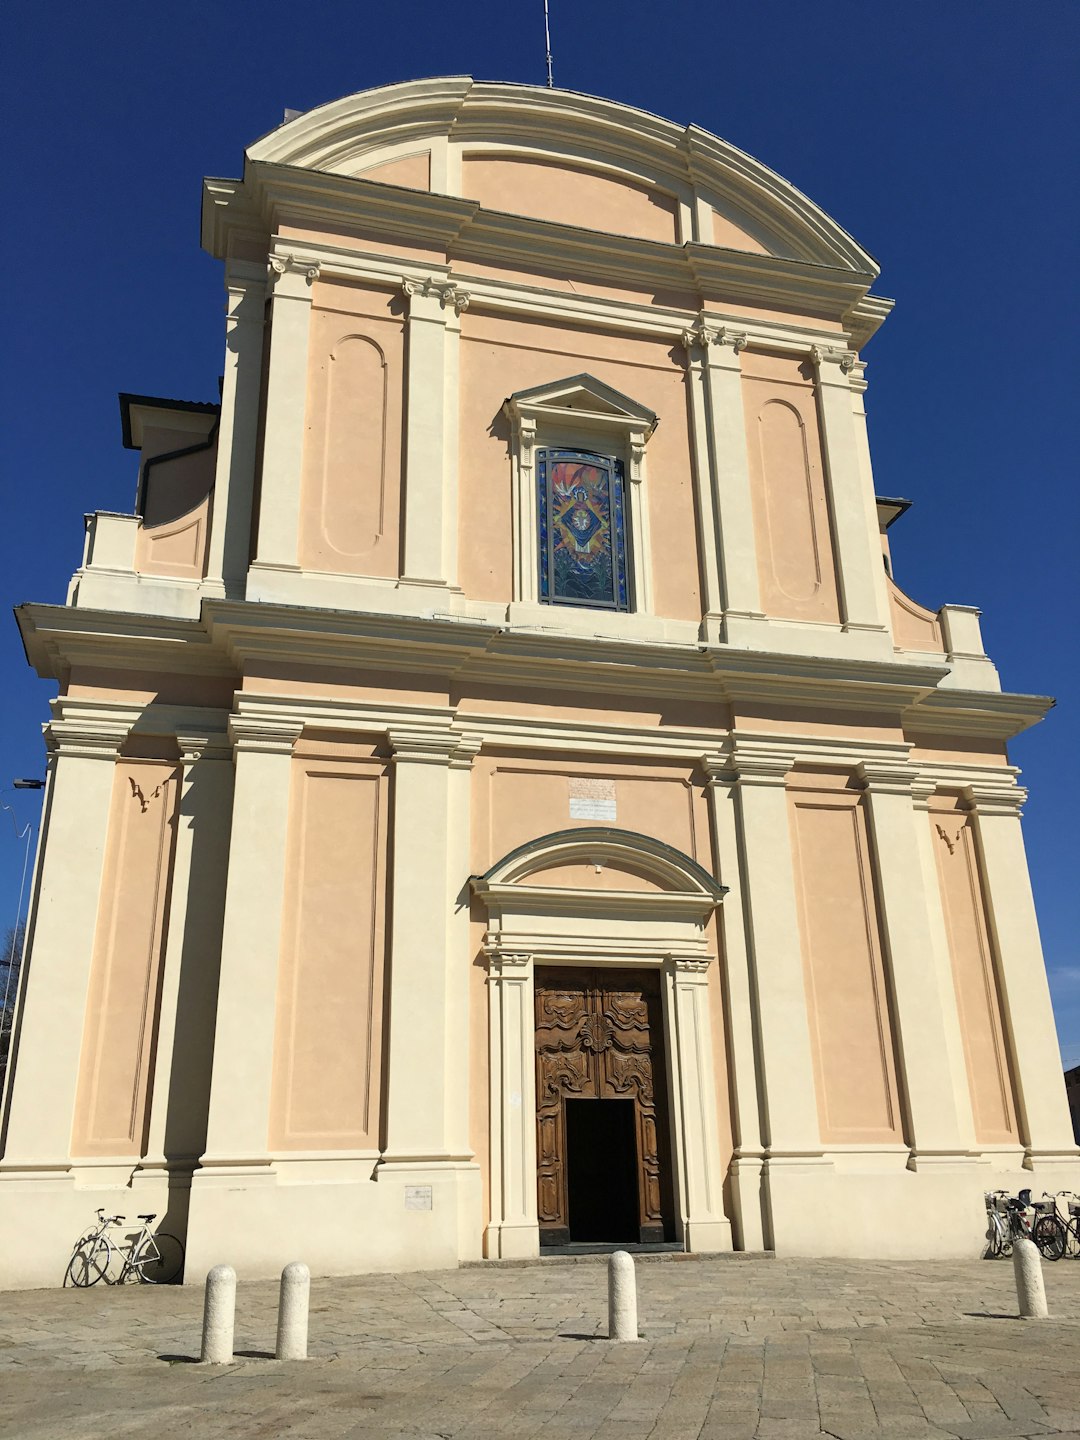 Place of worship photo spot Poggio Rusco Verona